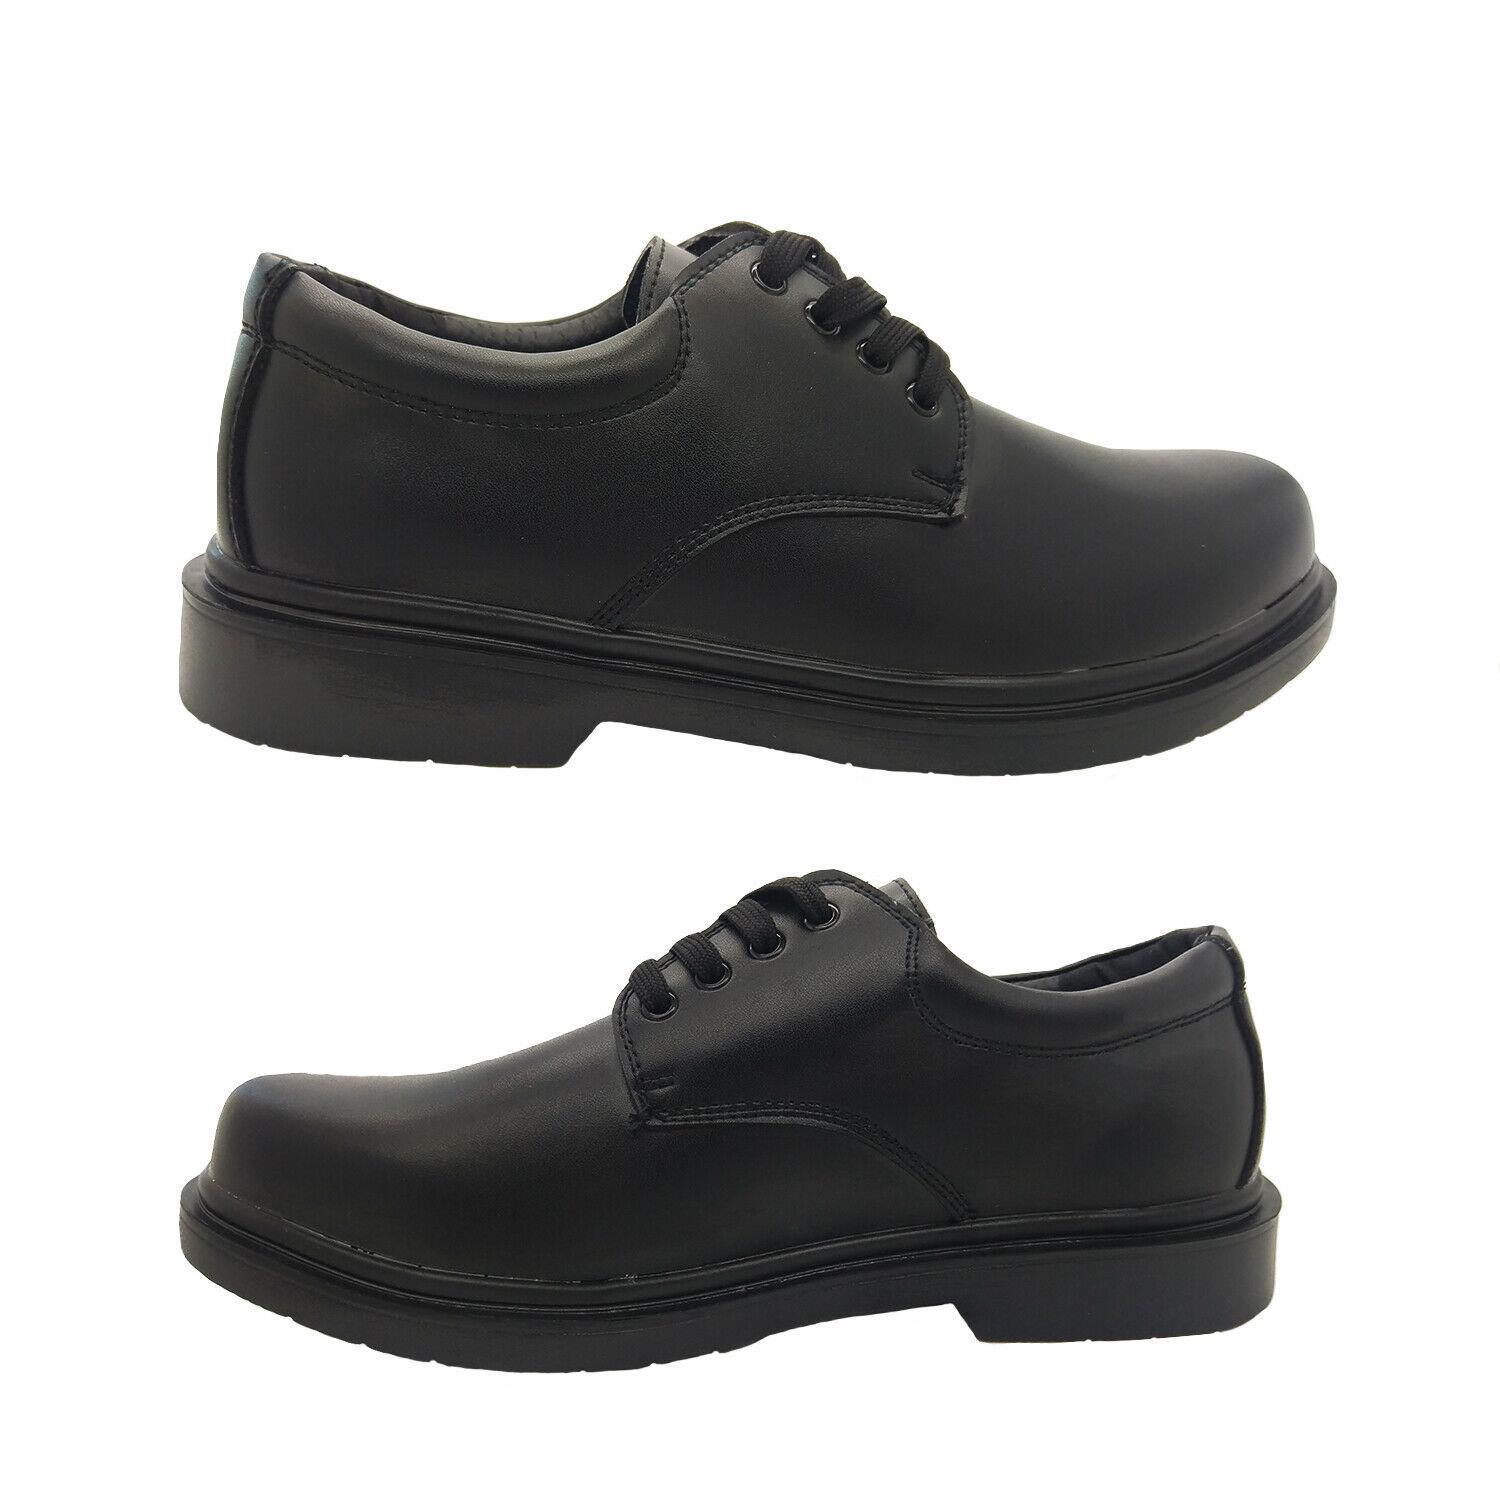 Boys Shoes Grosby Hamburg Jnr Black Boys/Youth Leather School Shoe Size 13-5 NEW Black 1